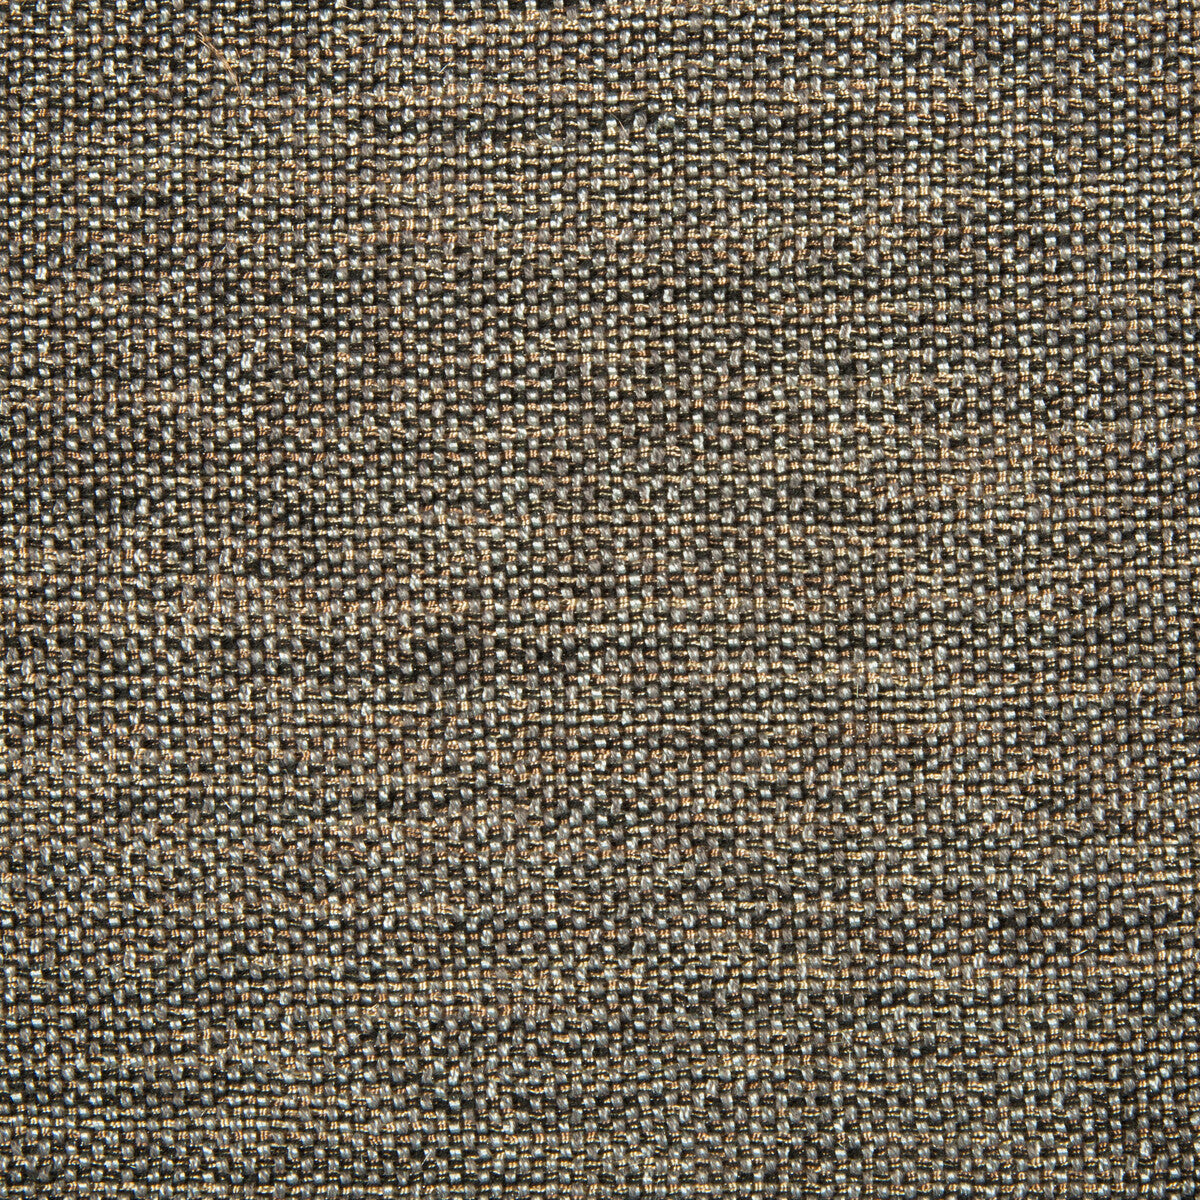 Kravet Smart fabric in 34939-8 color - pattern 34939.8.0 - by Kravet Smart